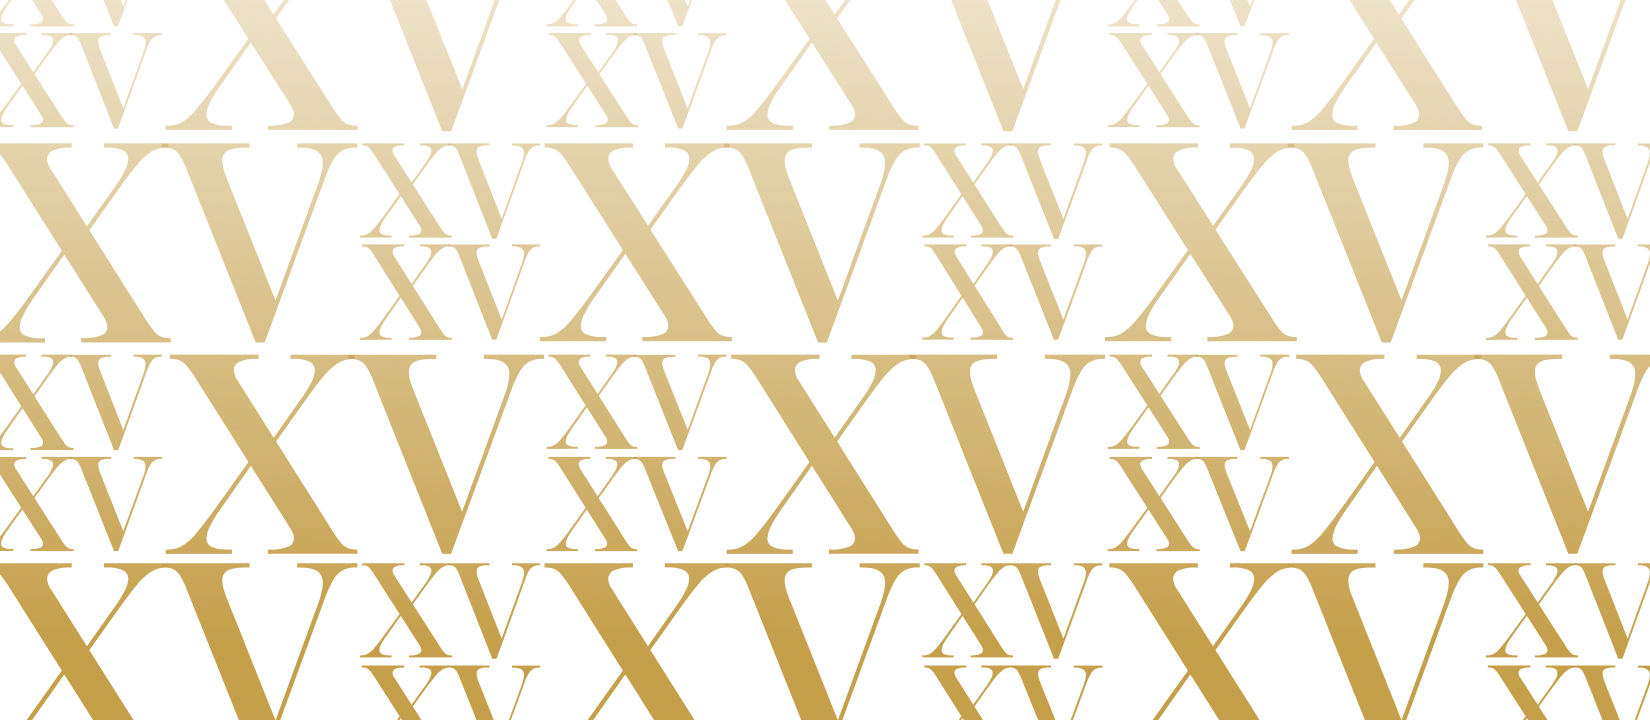 xv pattern